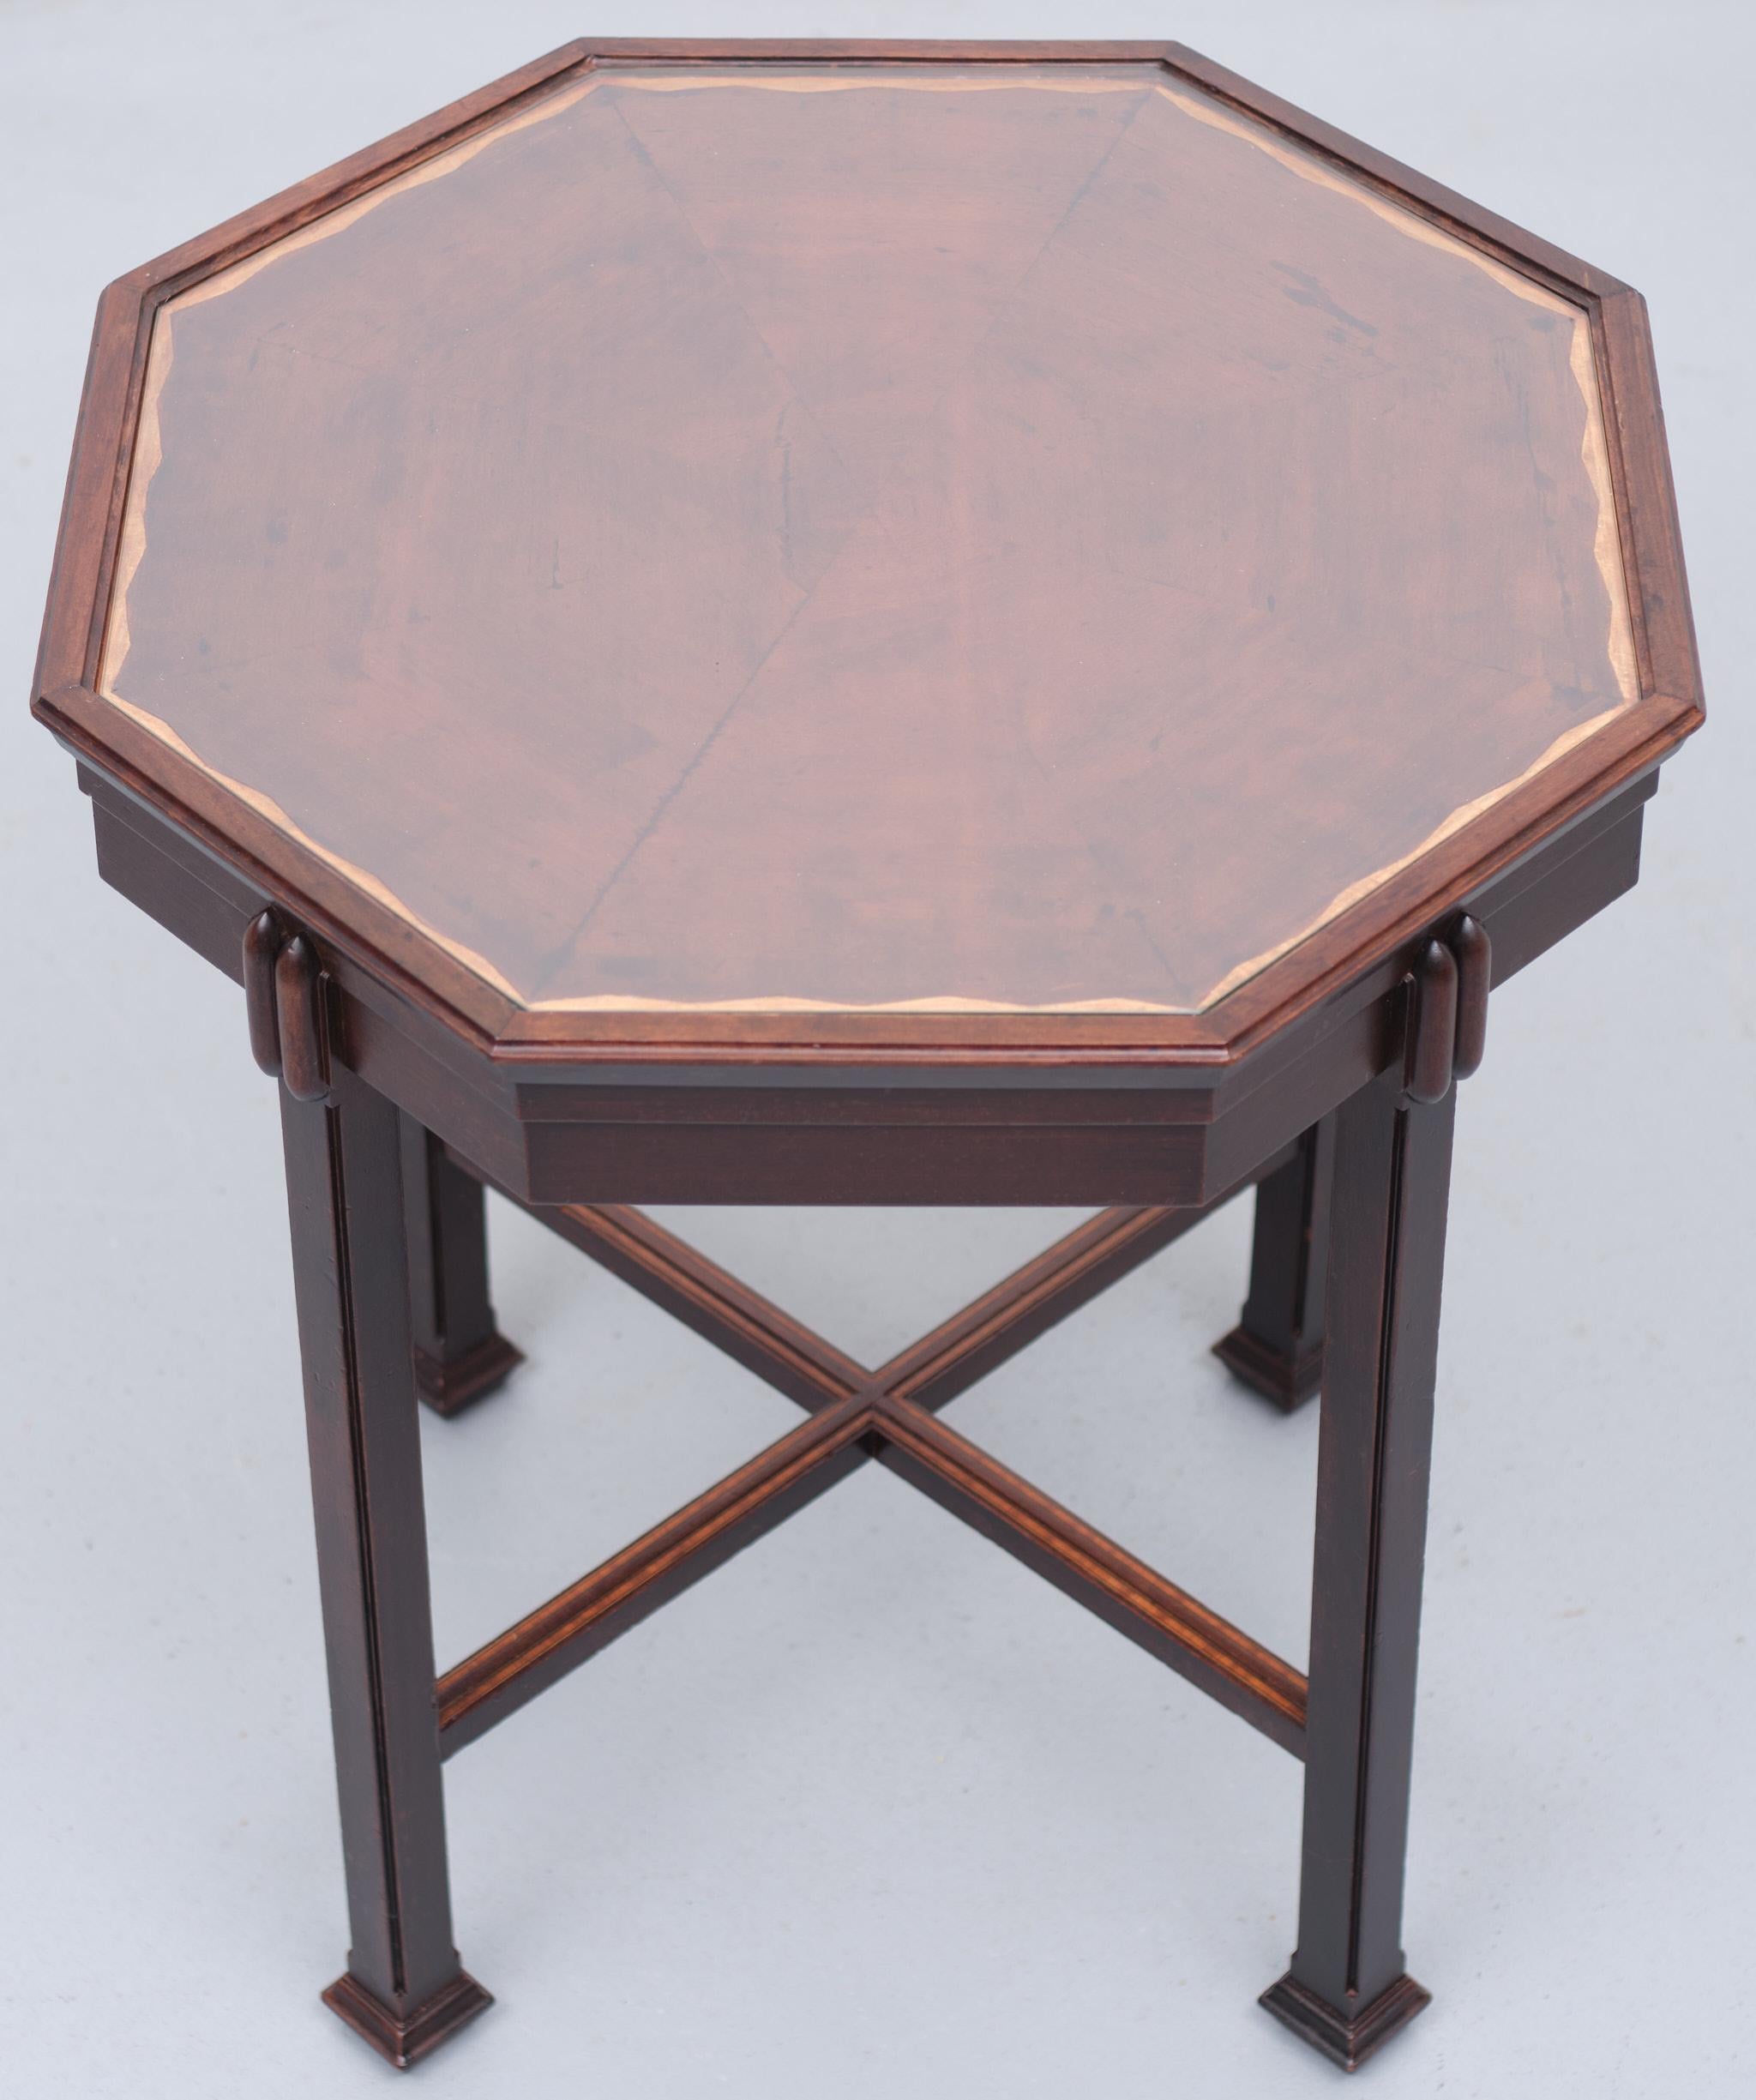 Dutch Art Deco Octagonal Mahogany Side Table 1925 For Sale 1